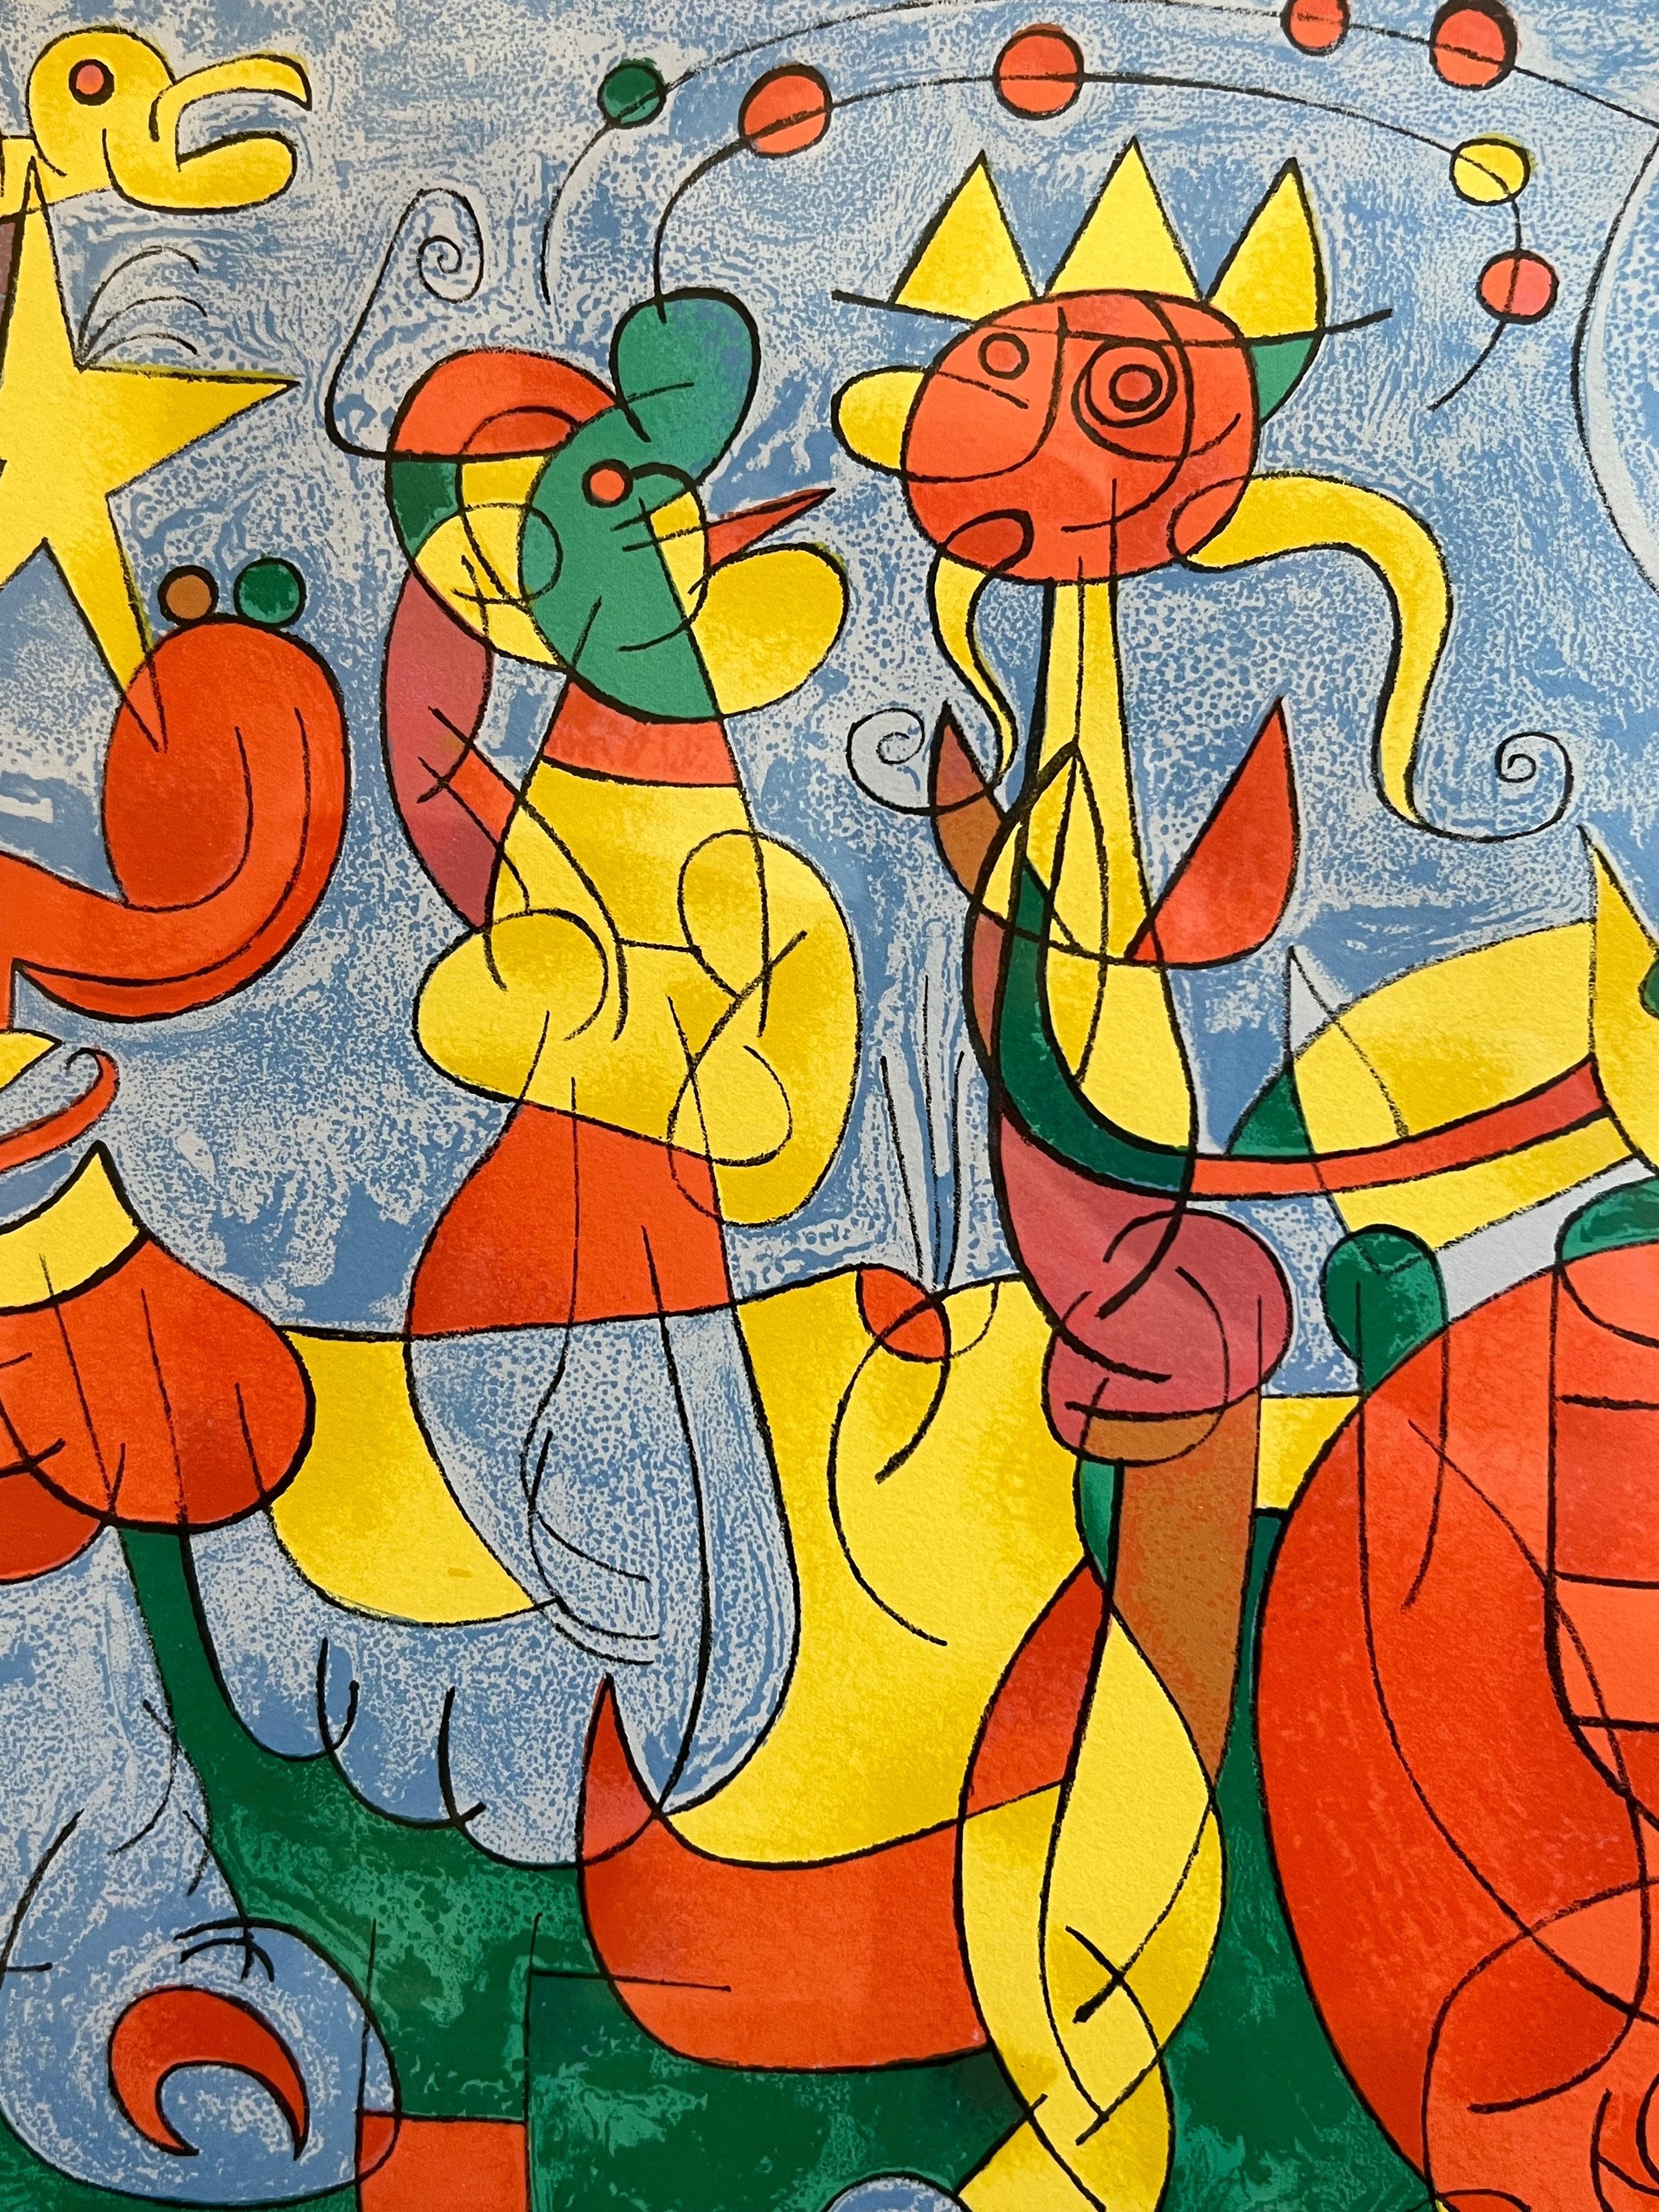 Große 1966 SURREAL Joan Miro Ubu roi (King Ubu): Platte 3 LITHOGRAPH farbig lackiert – Print von Joan Miró